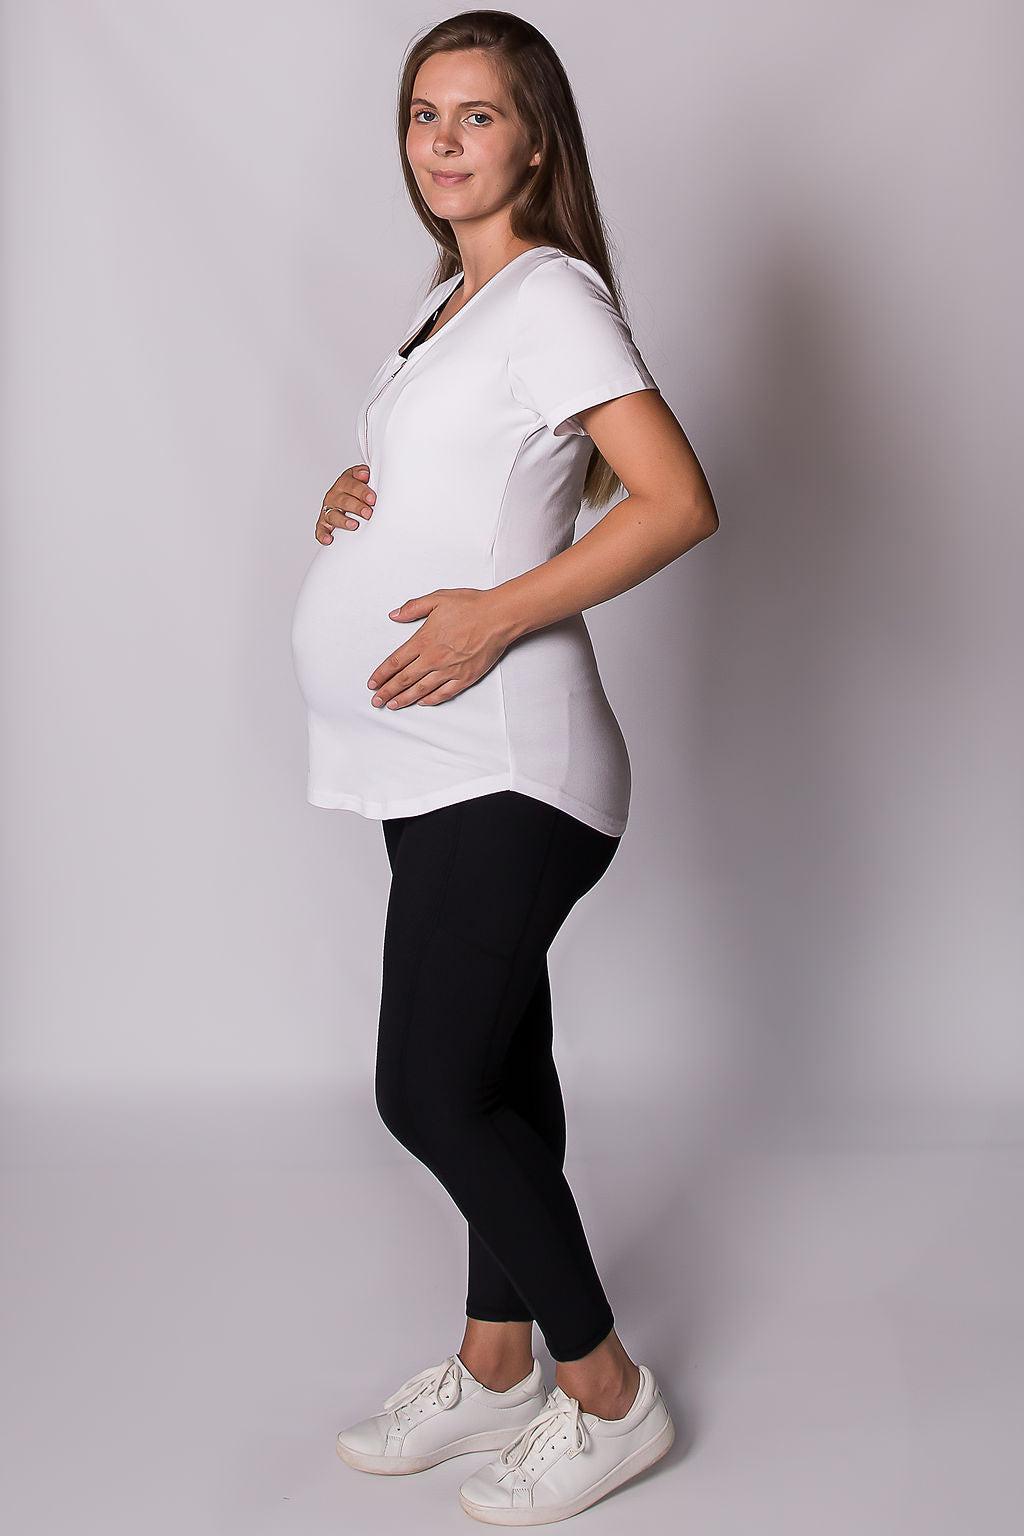 Rose Gold Zipper Tee - White-Breastfeeding t-shirt NZ, Maternity t-shirt NZ, Flourish Maternity